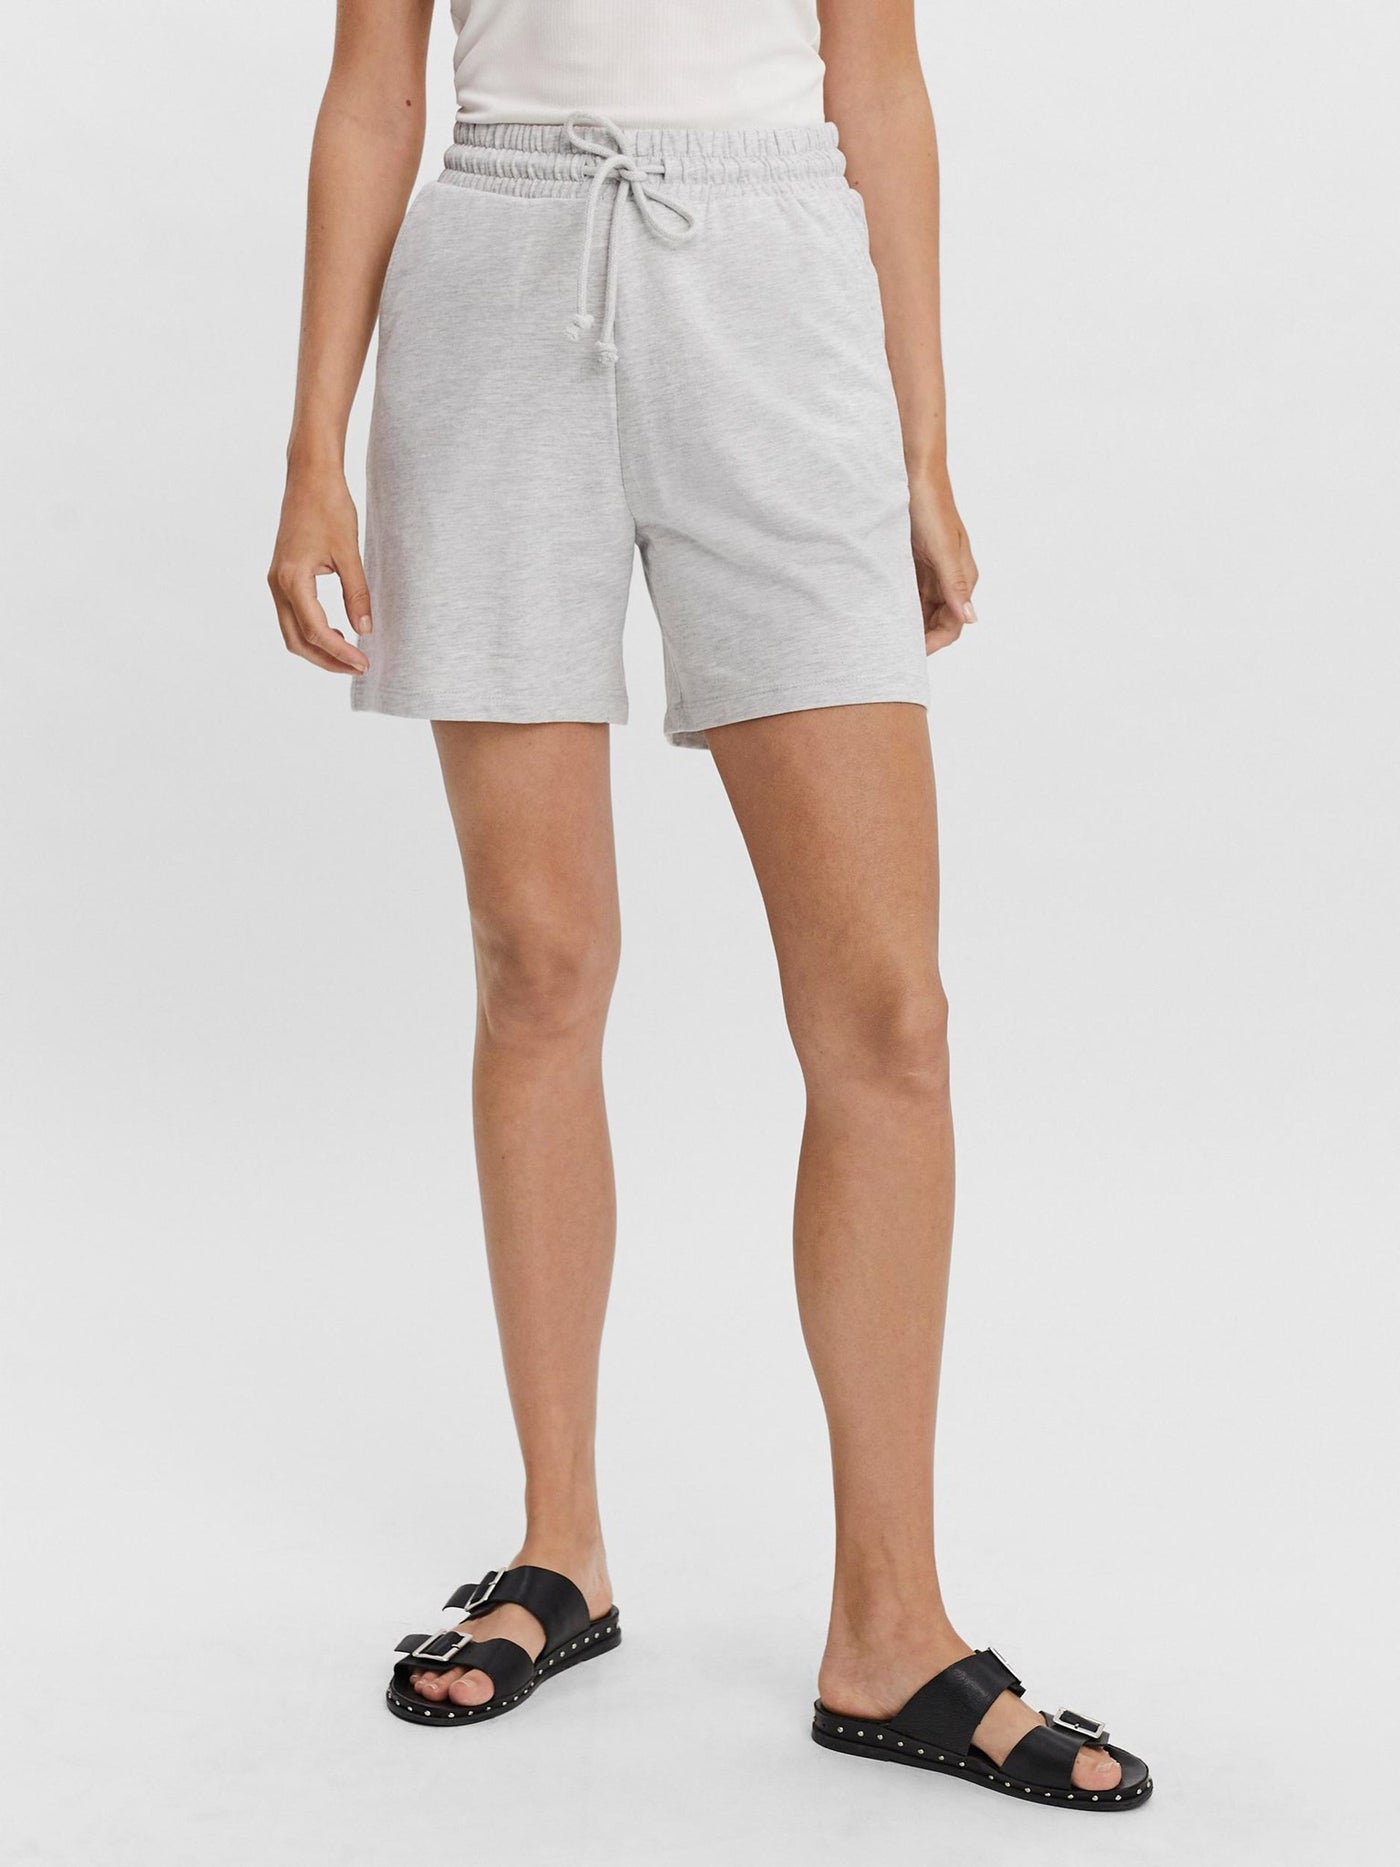 Octavia Sweat Shorts - Light grey - Vero Moda - Grey